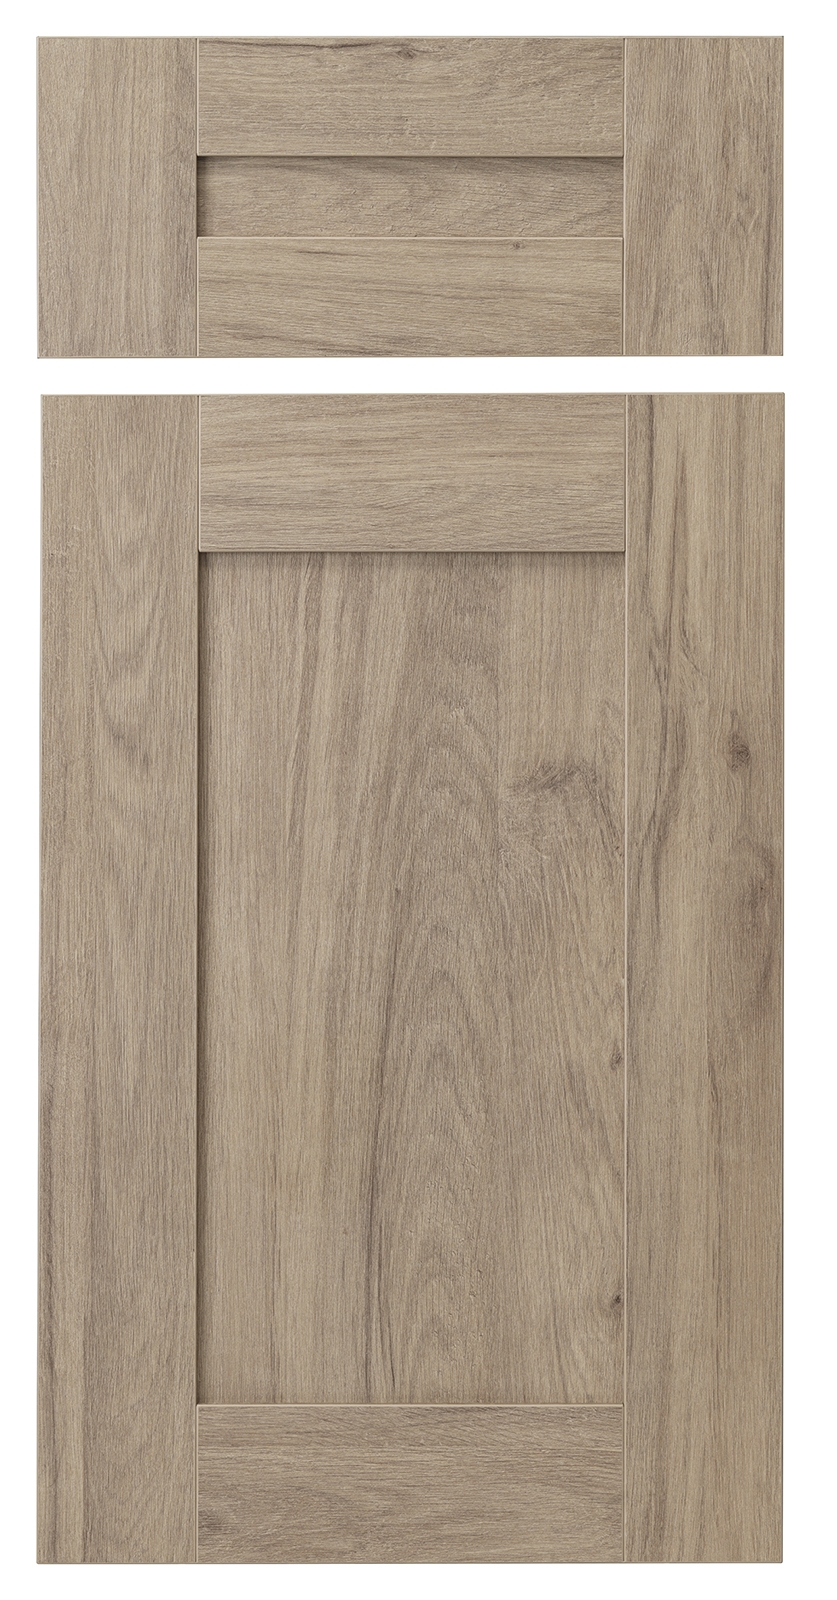 Contemporary Solid Wood Slab & Batten Cabinet Doors